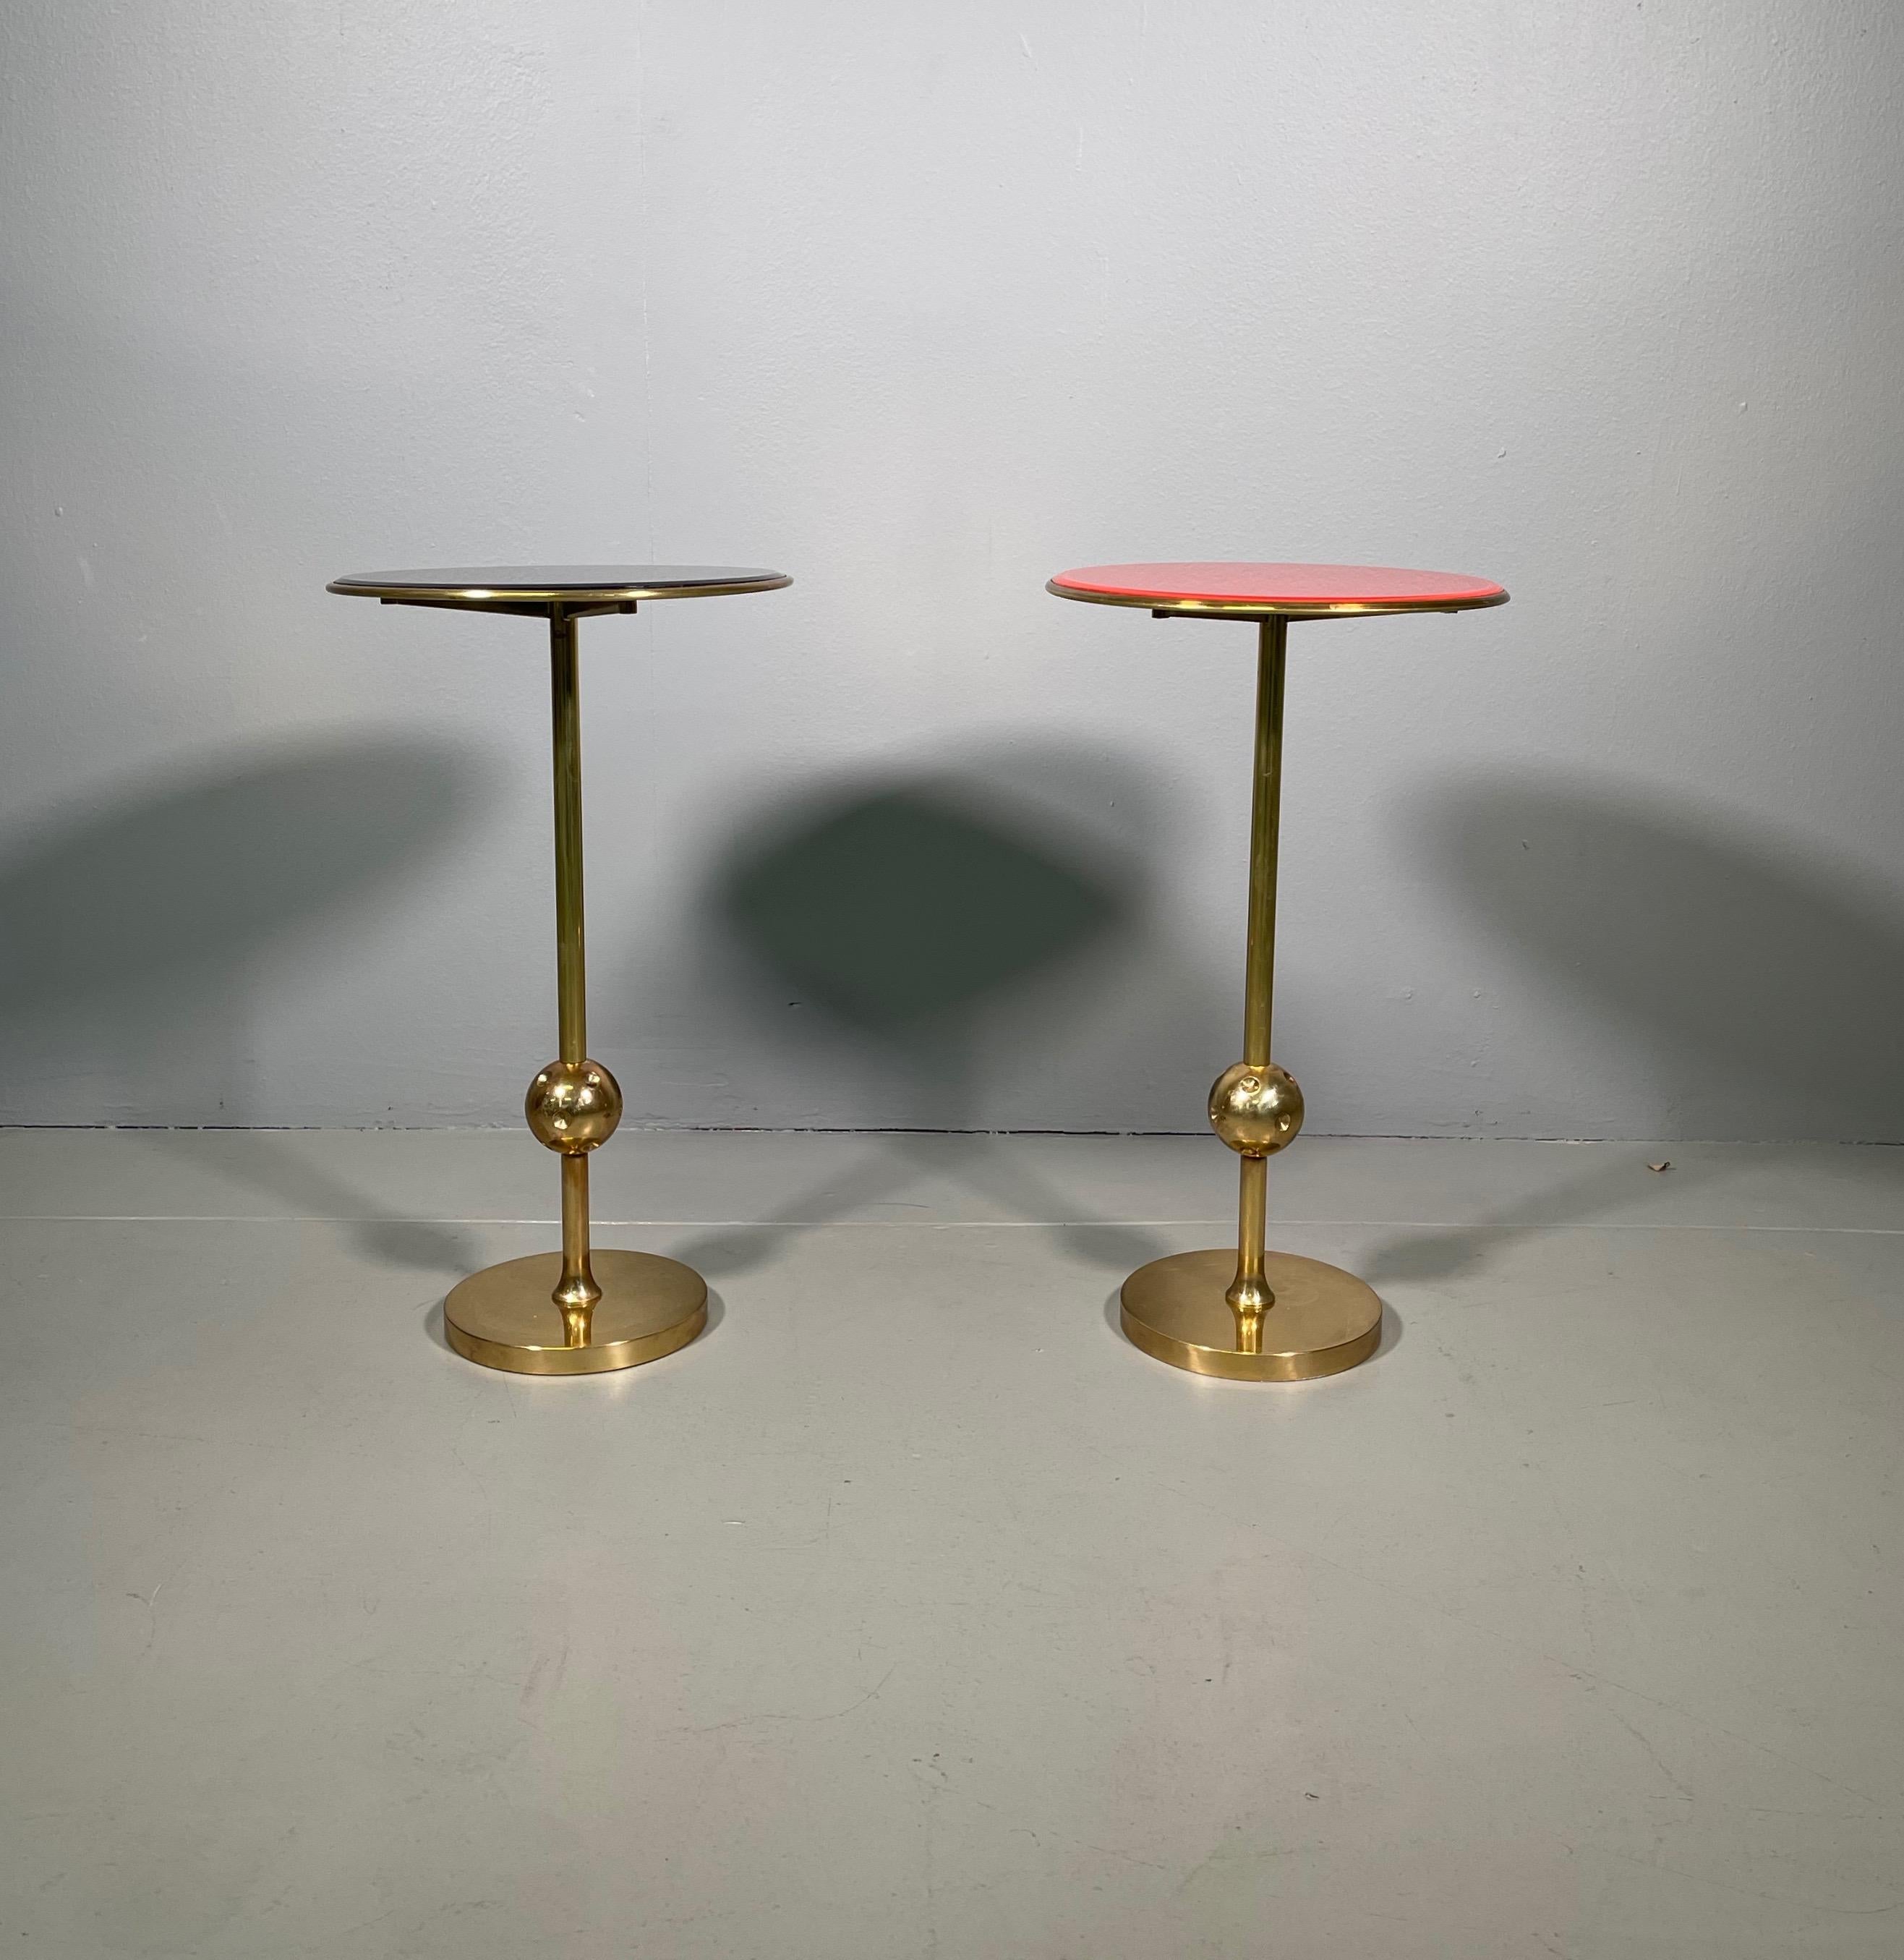 Rare pair Italian side table T1 by Osvaldo Borsani in brass and glass, 1950s.